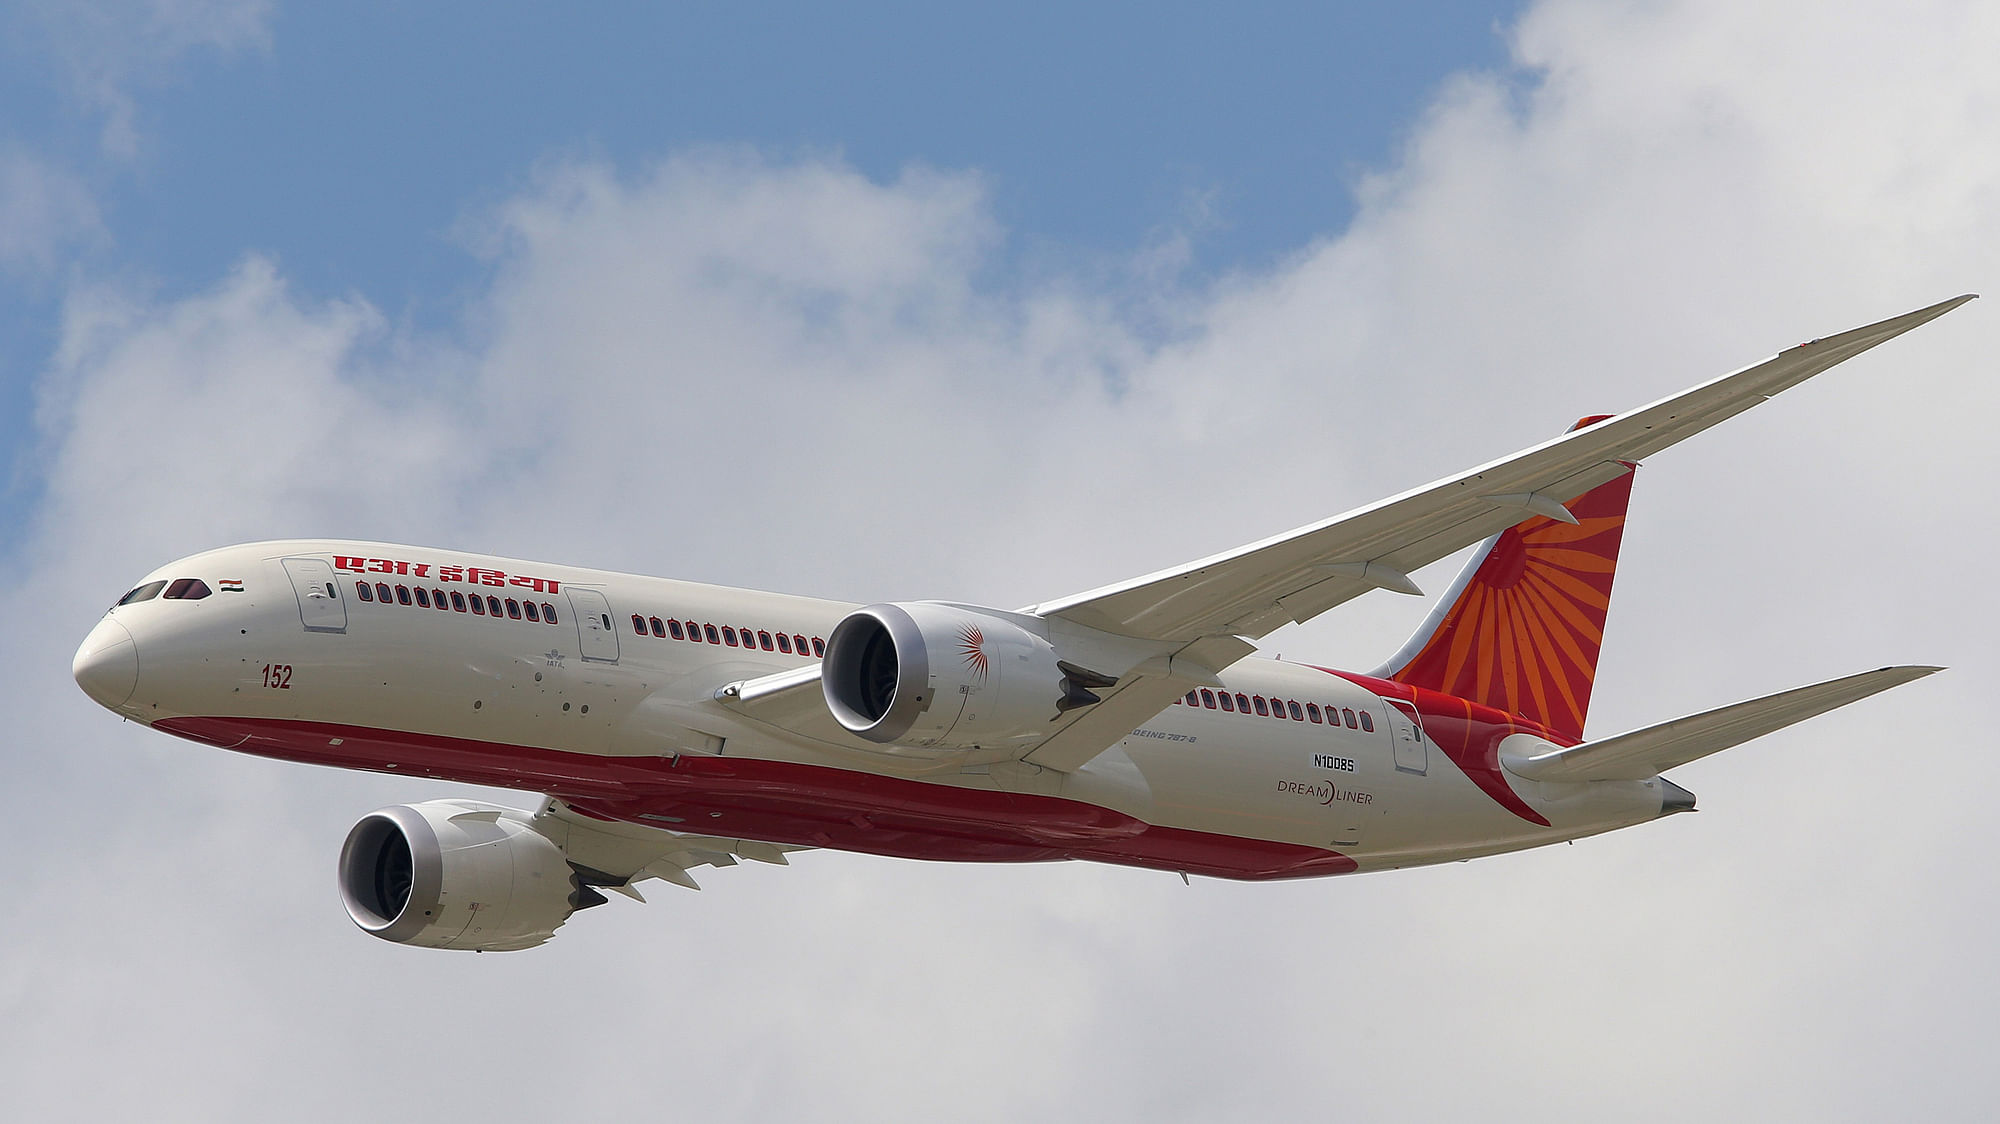 air india 144 flight status tracker